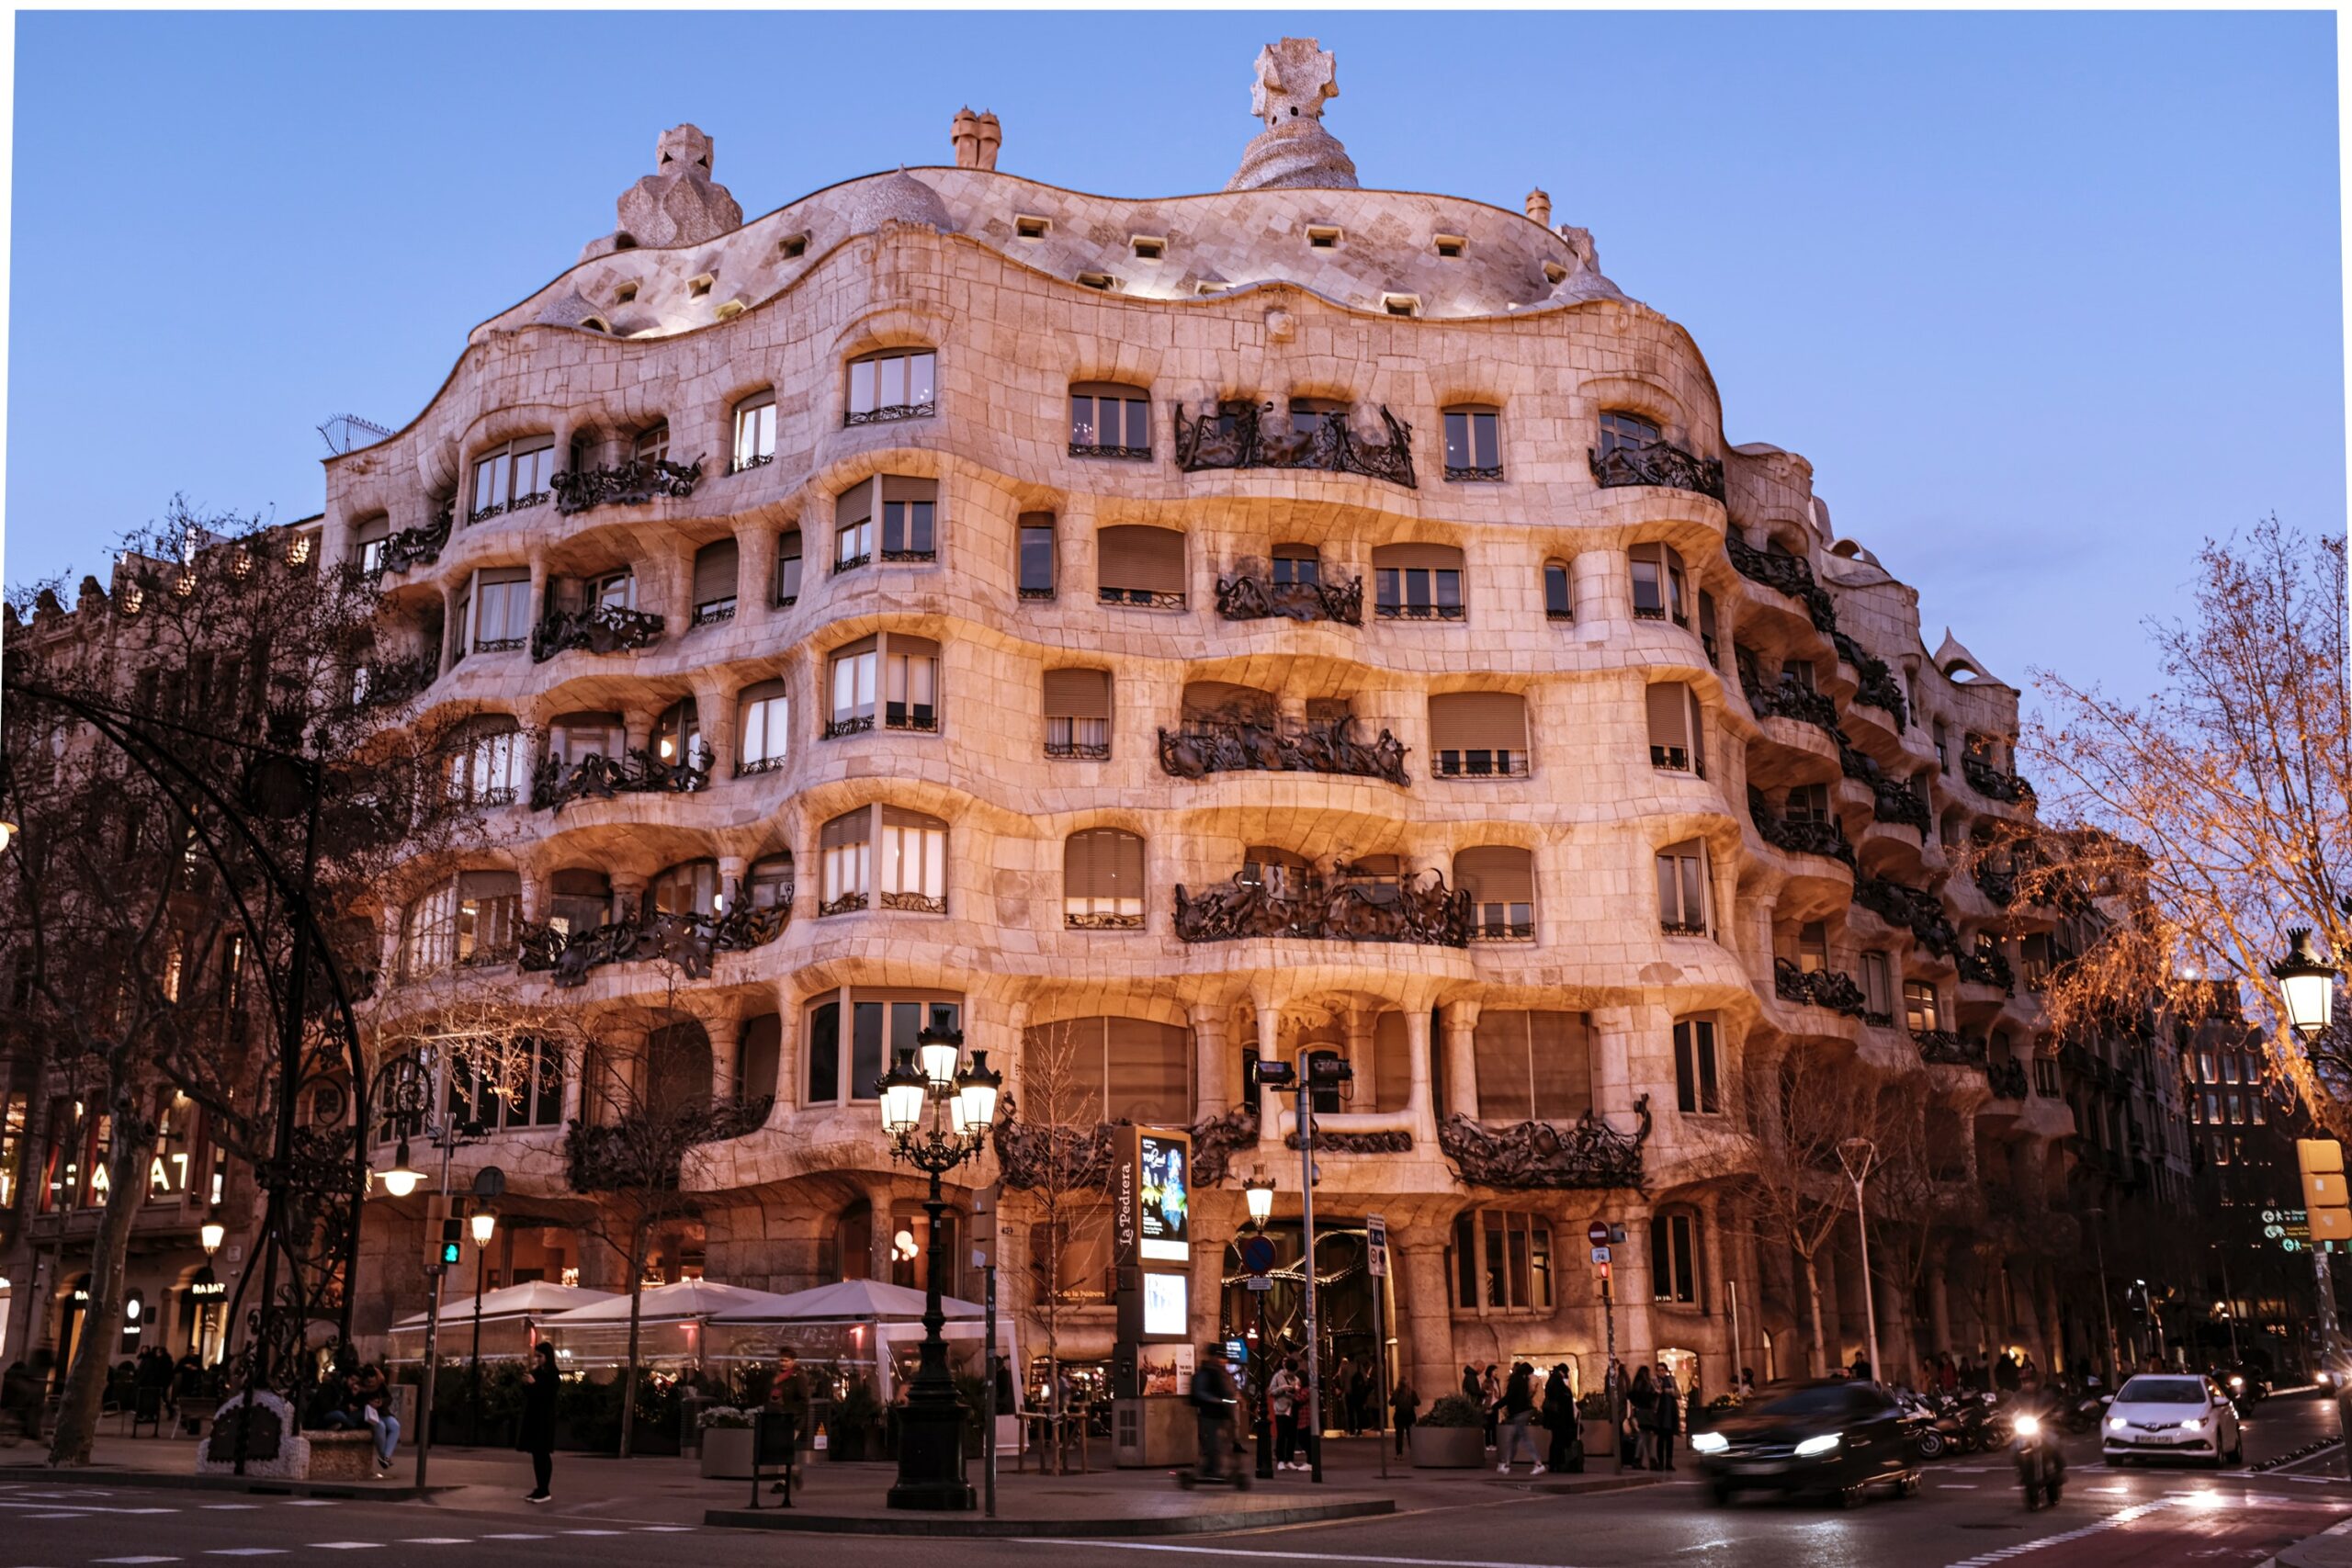 Gaudi's barcelona